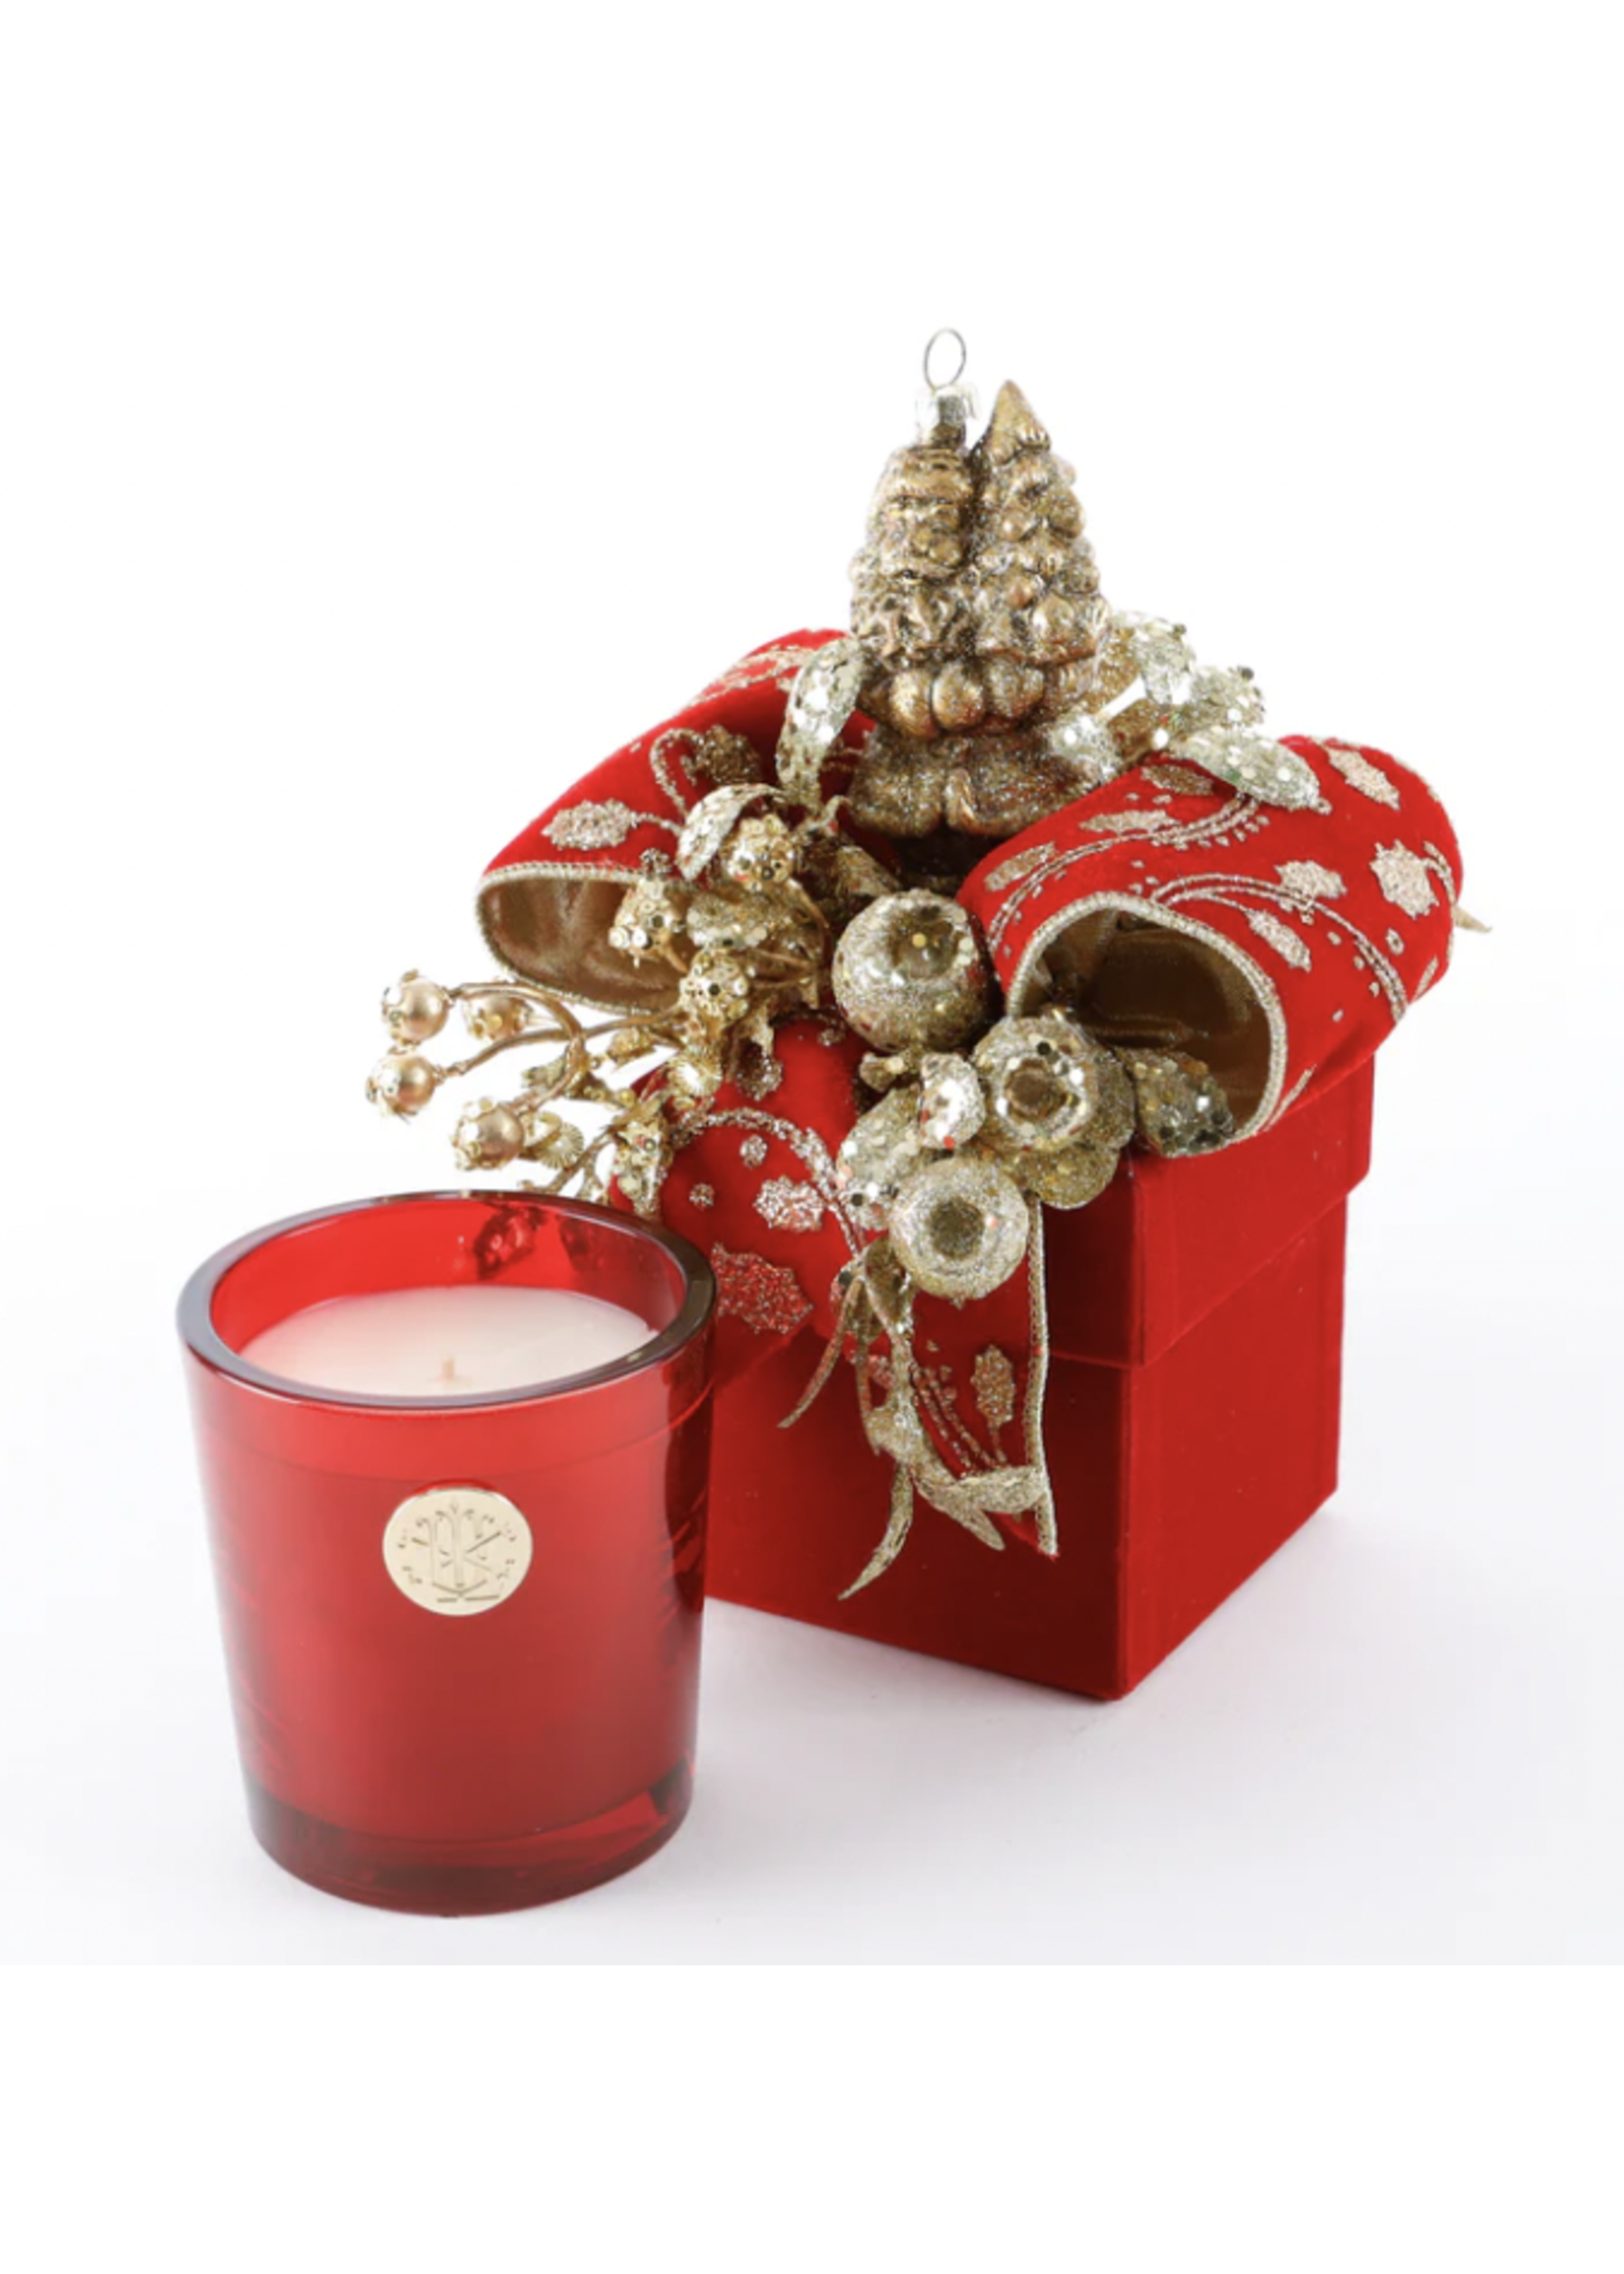 Jordans Velvet Gift Box 14oz Candle with Ornament Topper